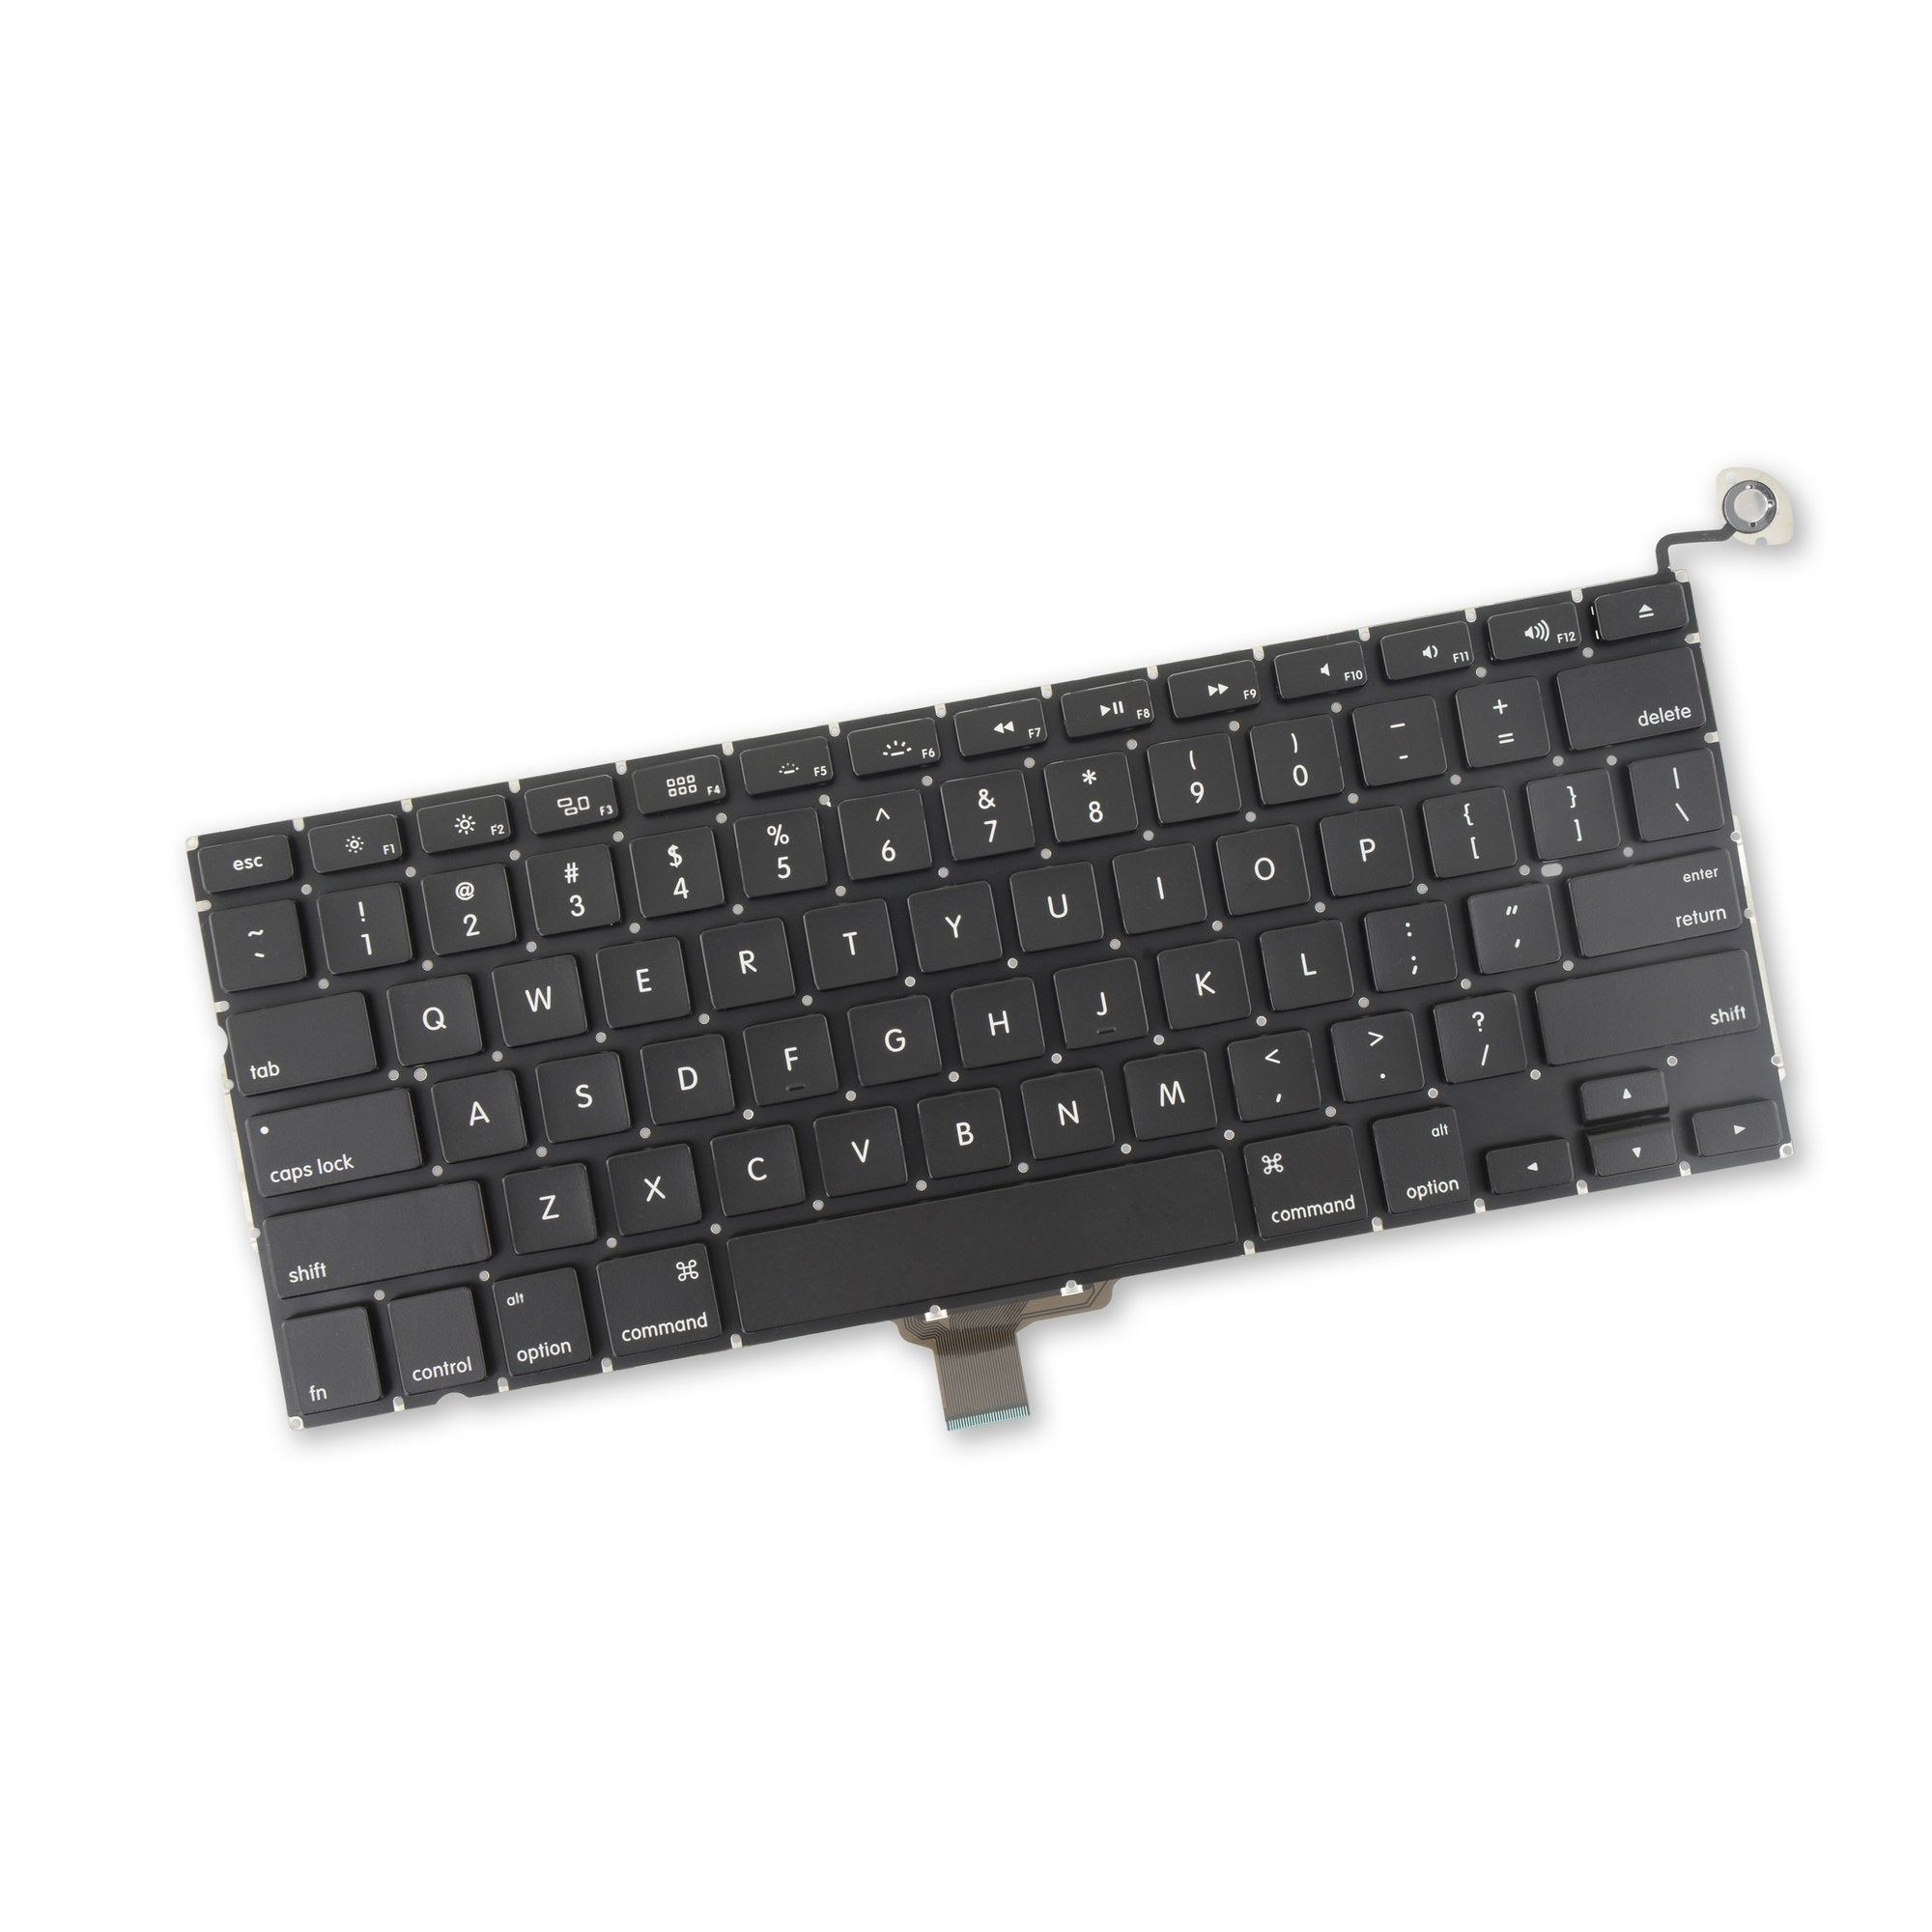 MacBook Pro 13 Unibody A1278 (Mid 2009-Mid 2012) Keyboard